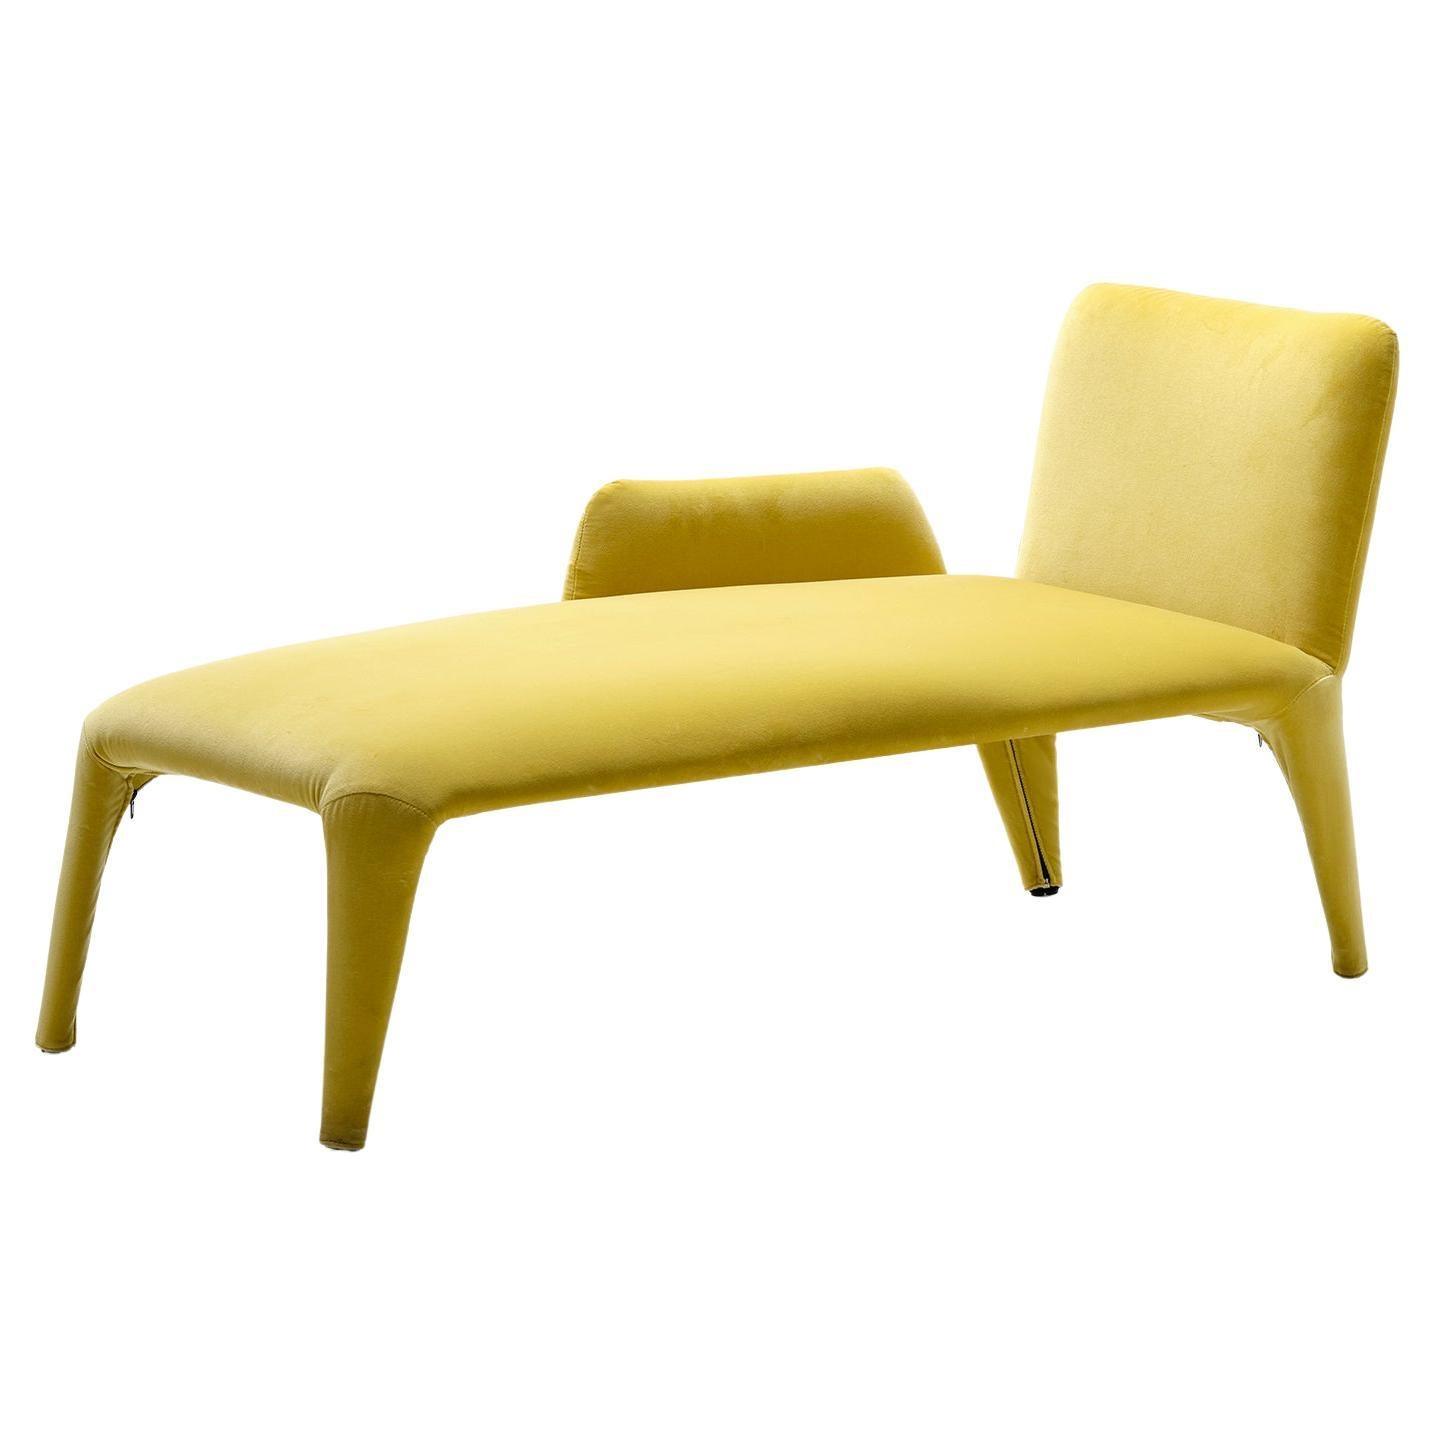 Moderne Textil-Sessel Longue des 21. Jahrhunderts mit abnehmbarem Deckel